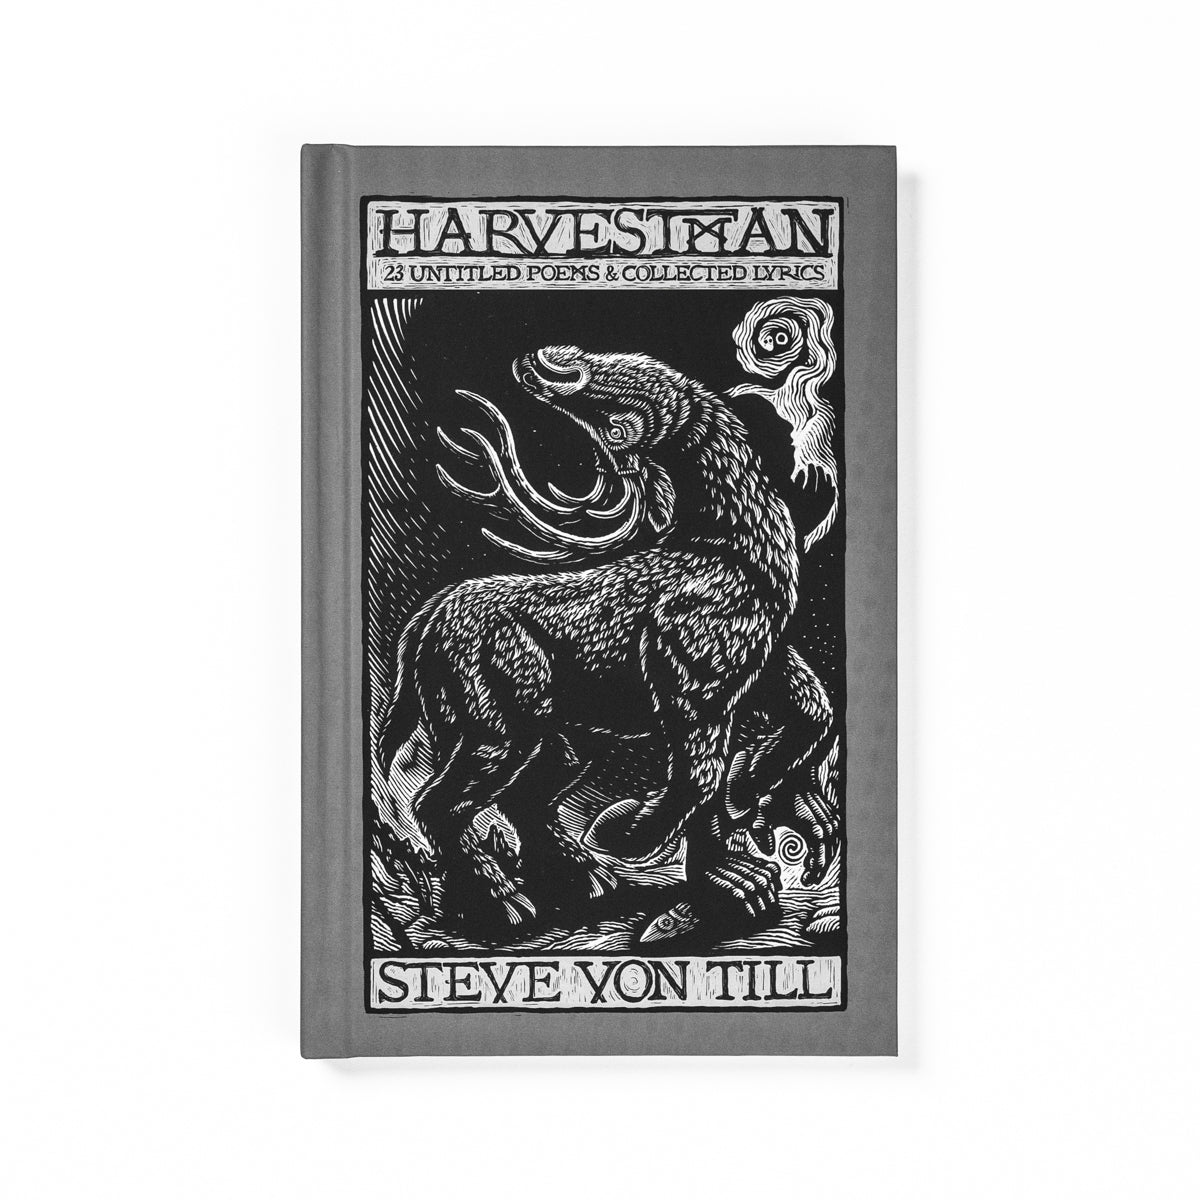 STEVE VON TILL "Harvestman - 23 Untitled Poems & Collected Lyrics" Book